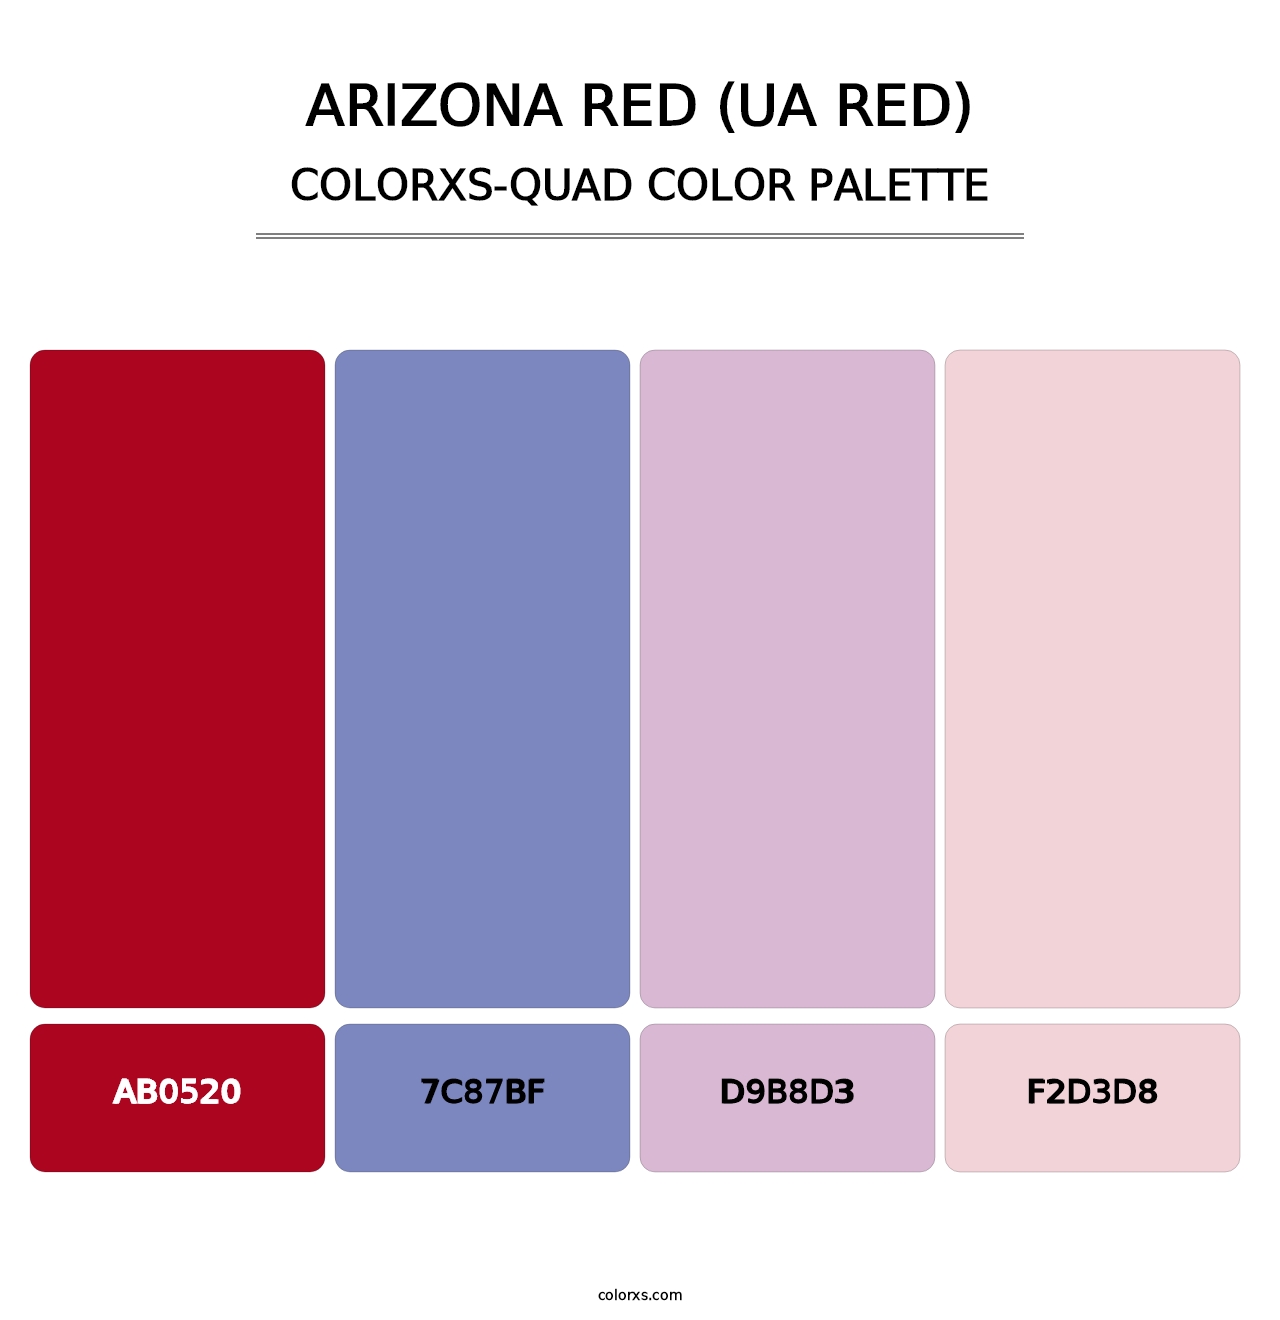 Arizona Red (UA Red) - Colorxs Quad Palette